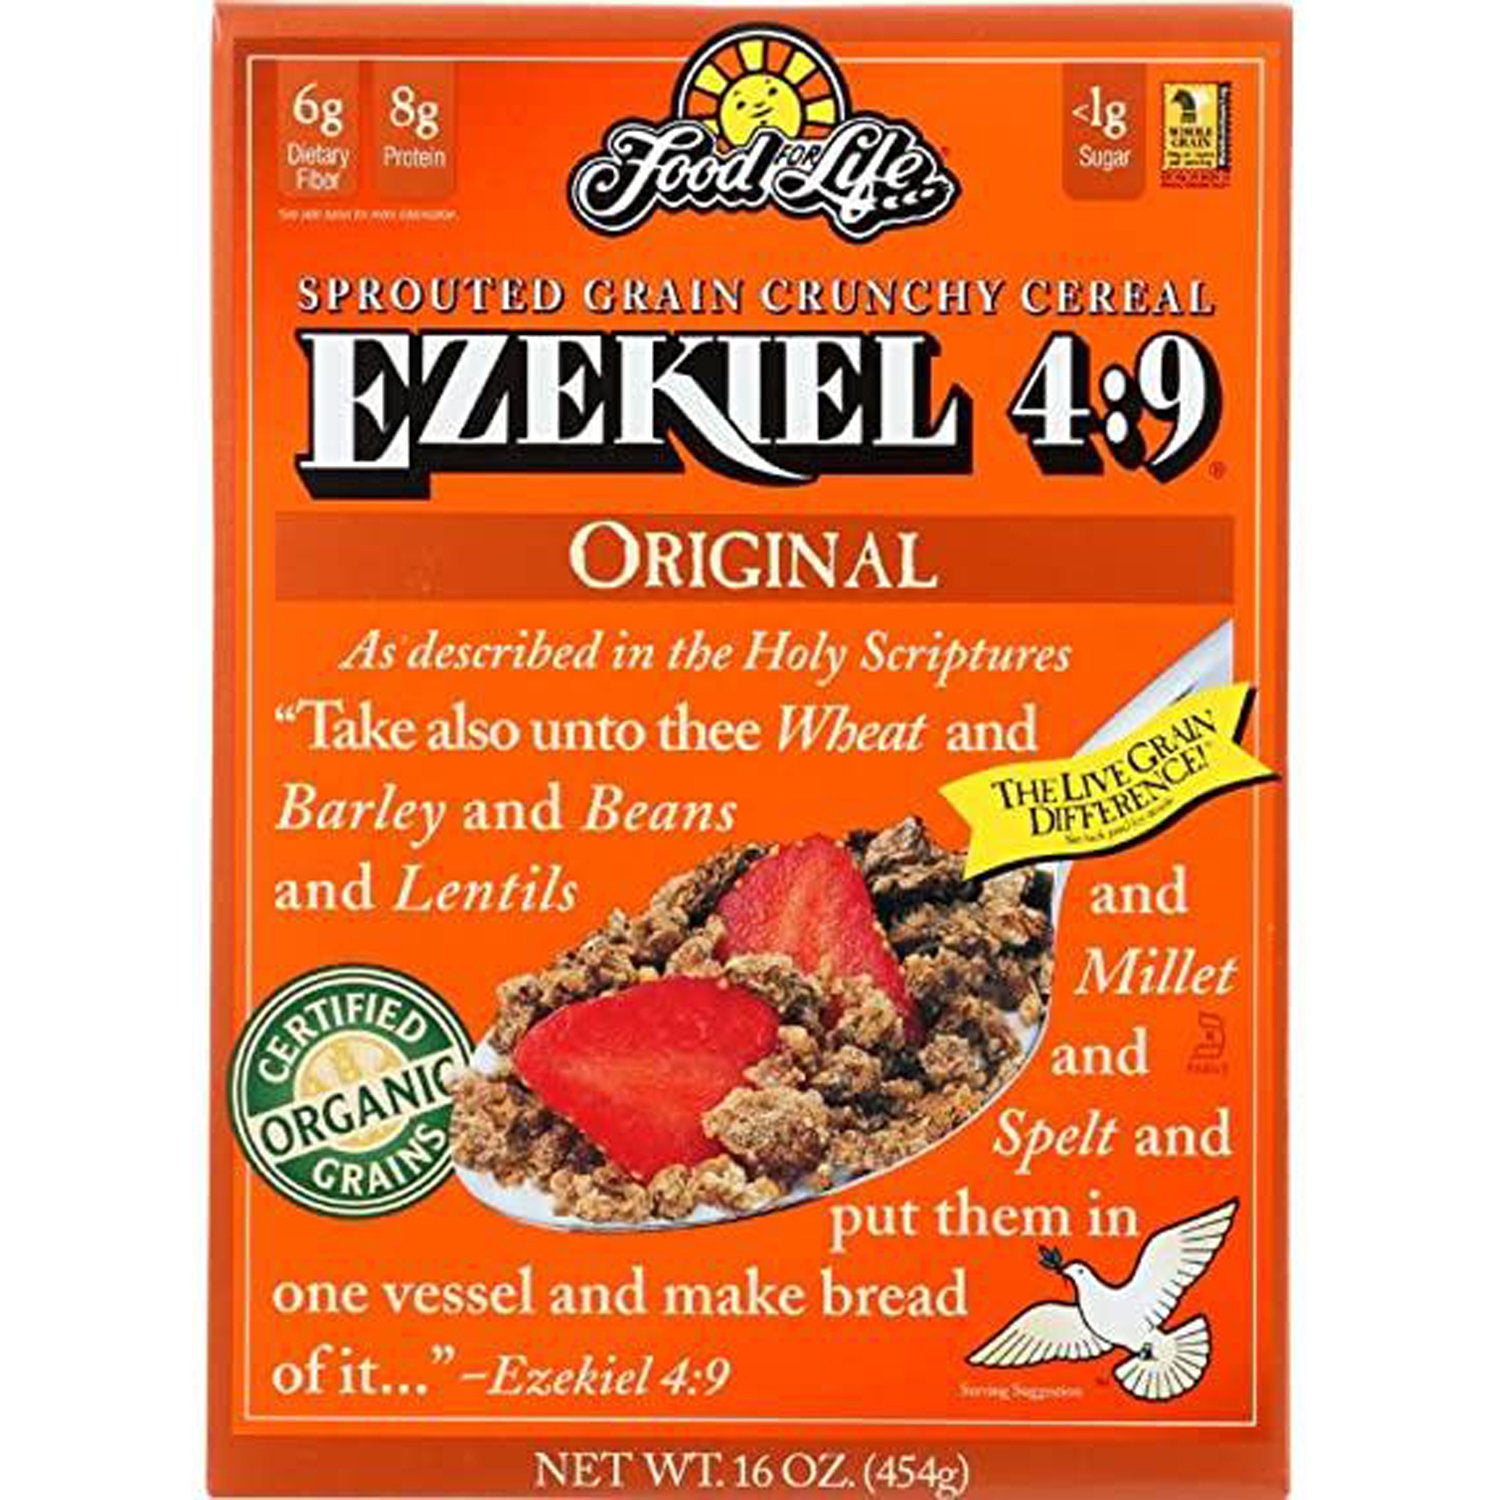 EZEKIEL 4:9® Original Sprouted Grqin Crunchy Cereal, 454g